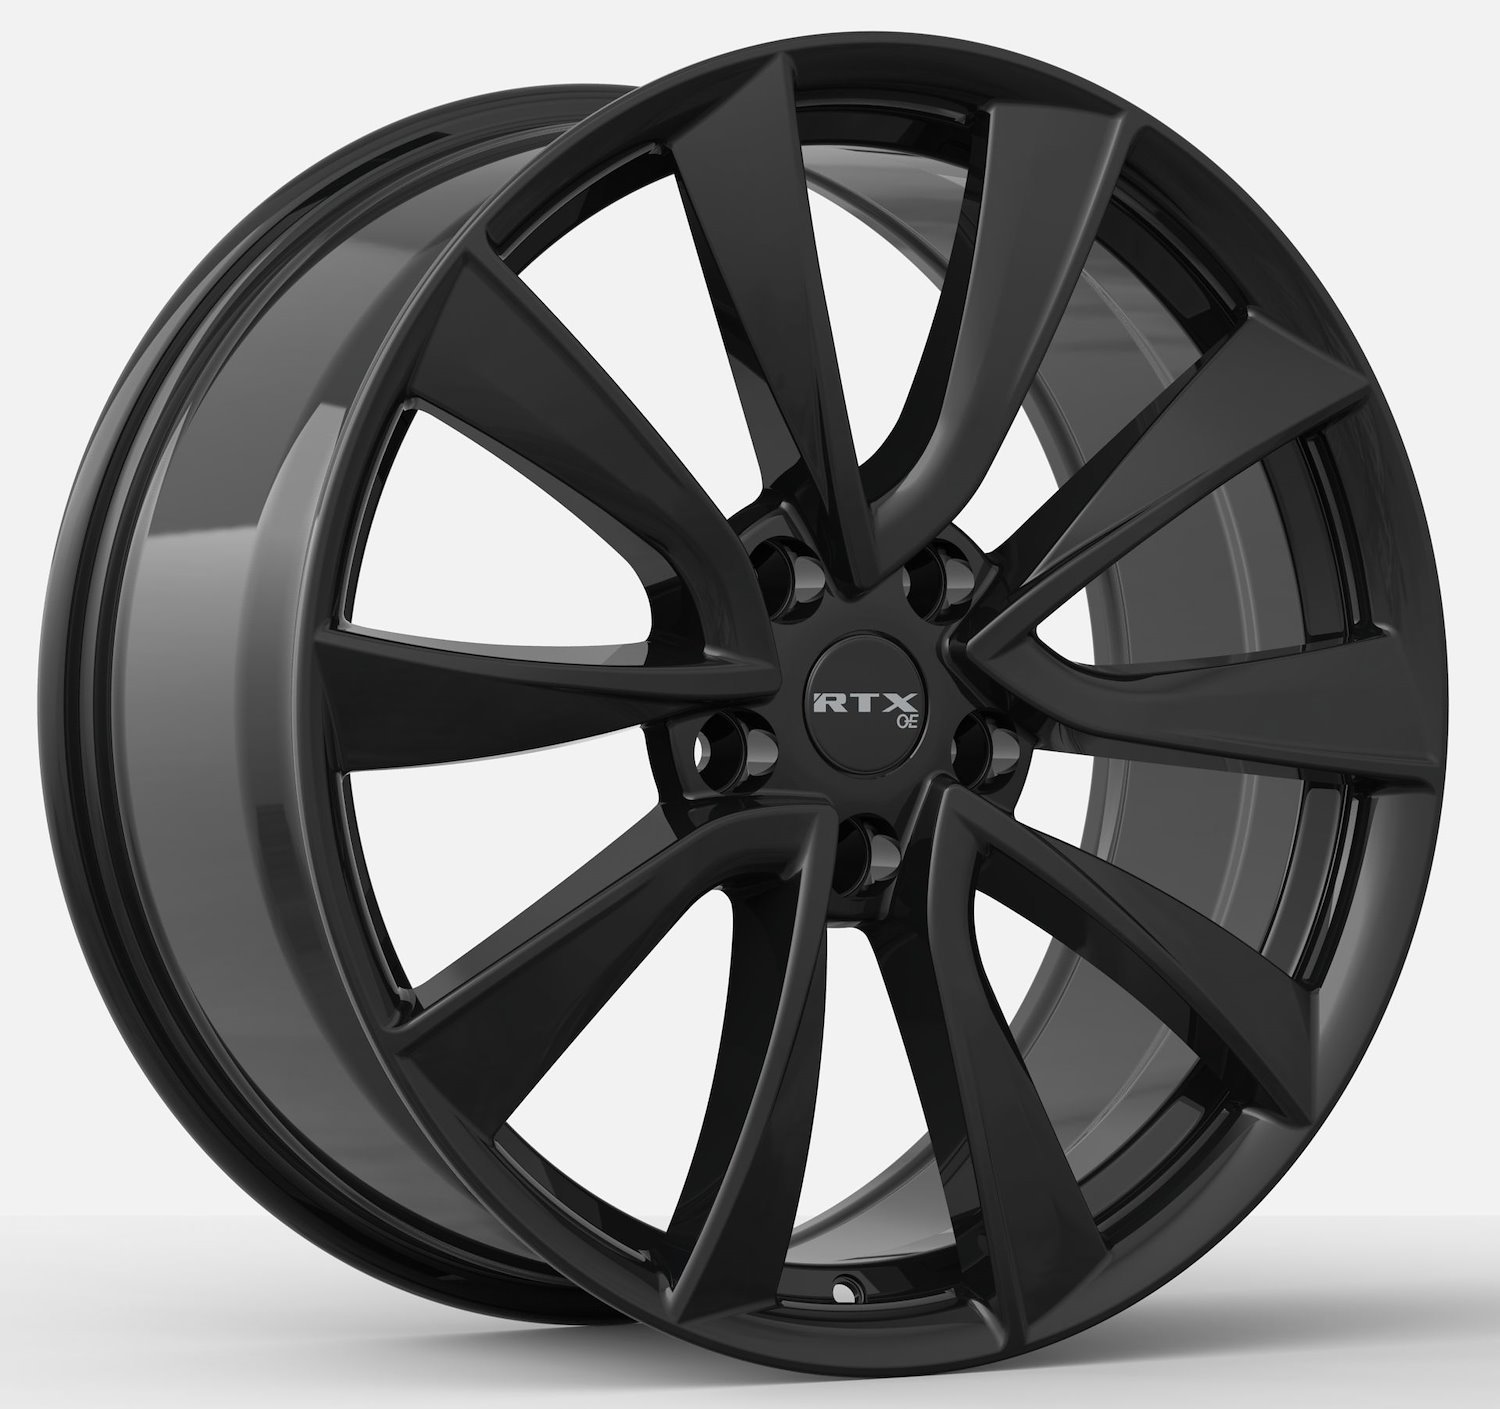 083210 OE-Series TS-01 Wheel [Size: 18" x 8.50"] Gloss Black Finish